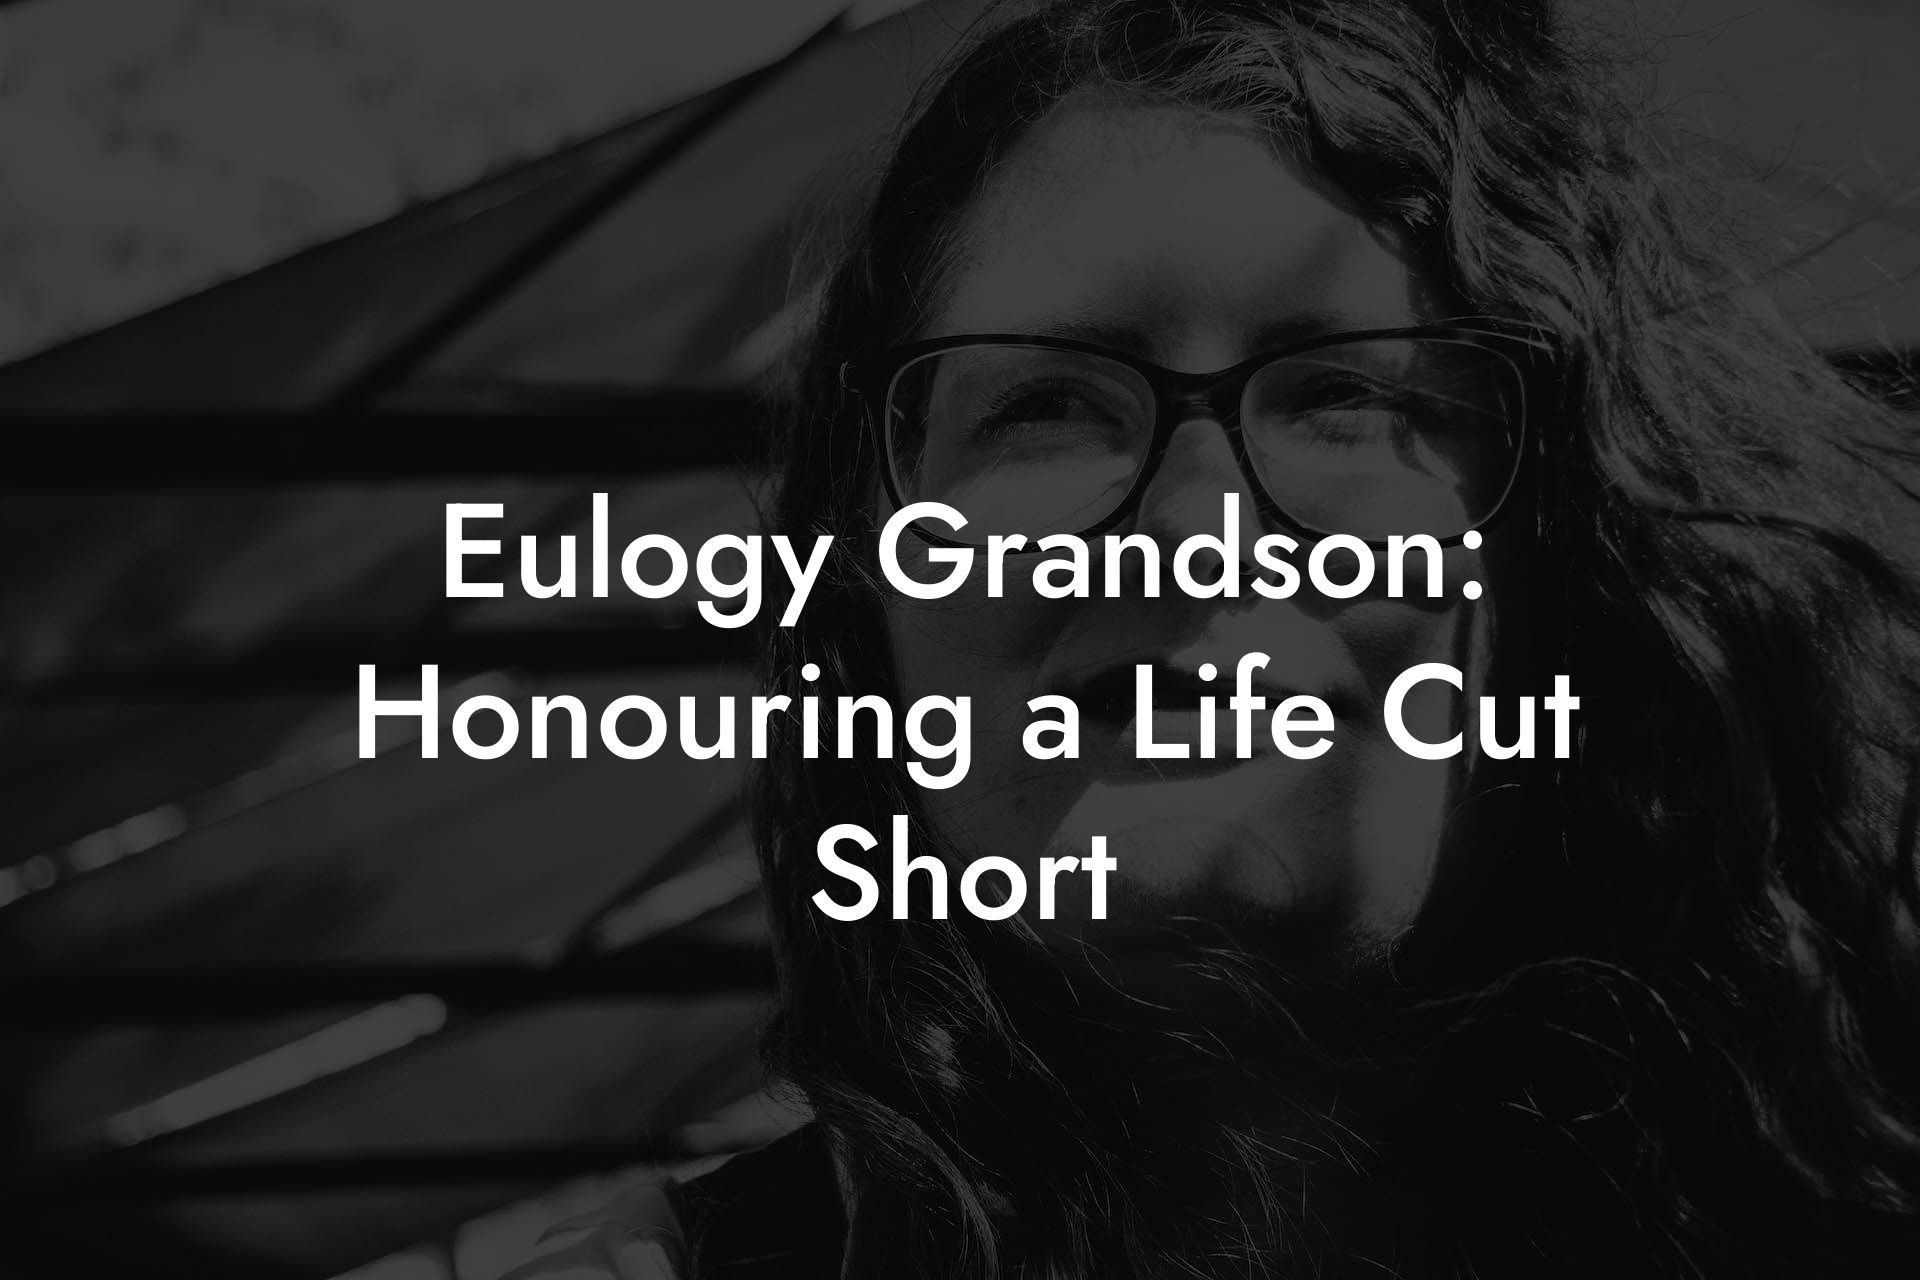 Eulogy Grandson: Honouring a Life Cut Short